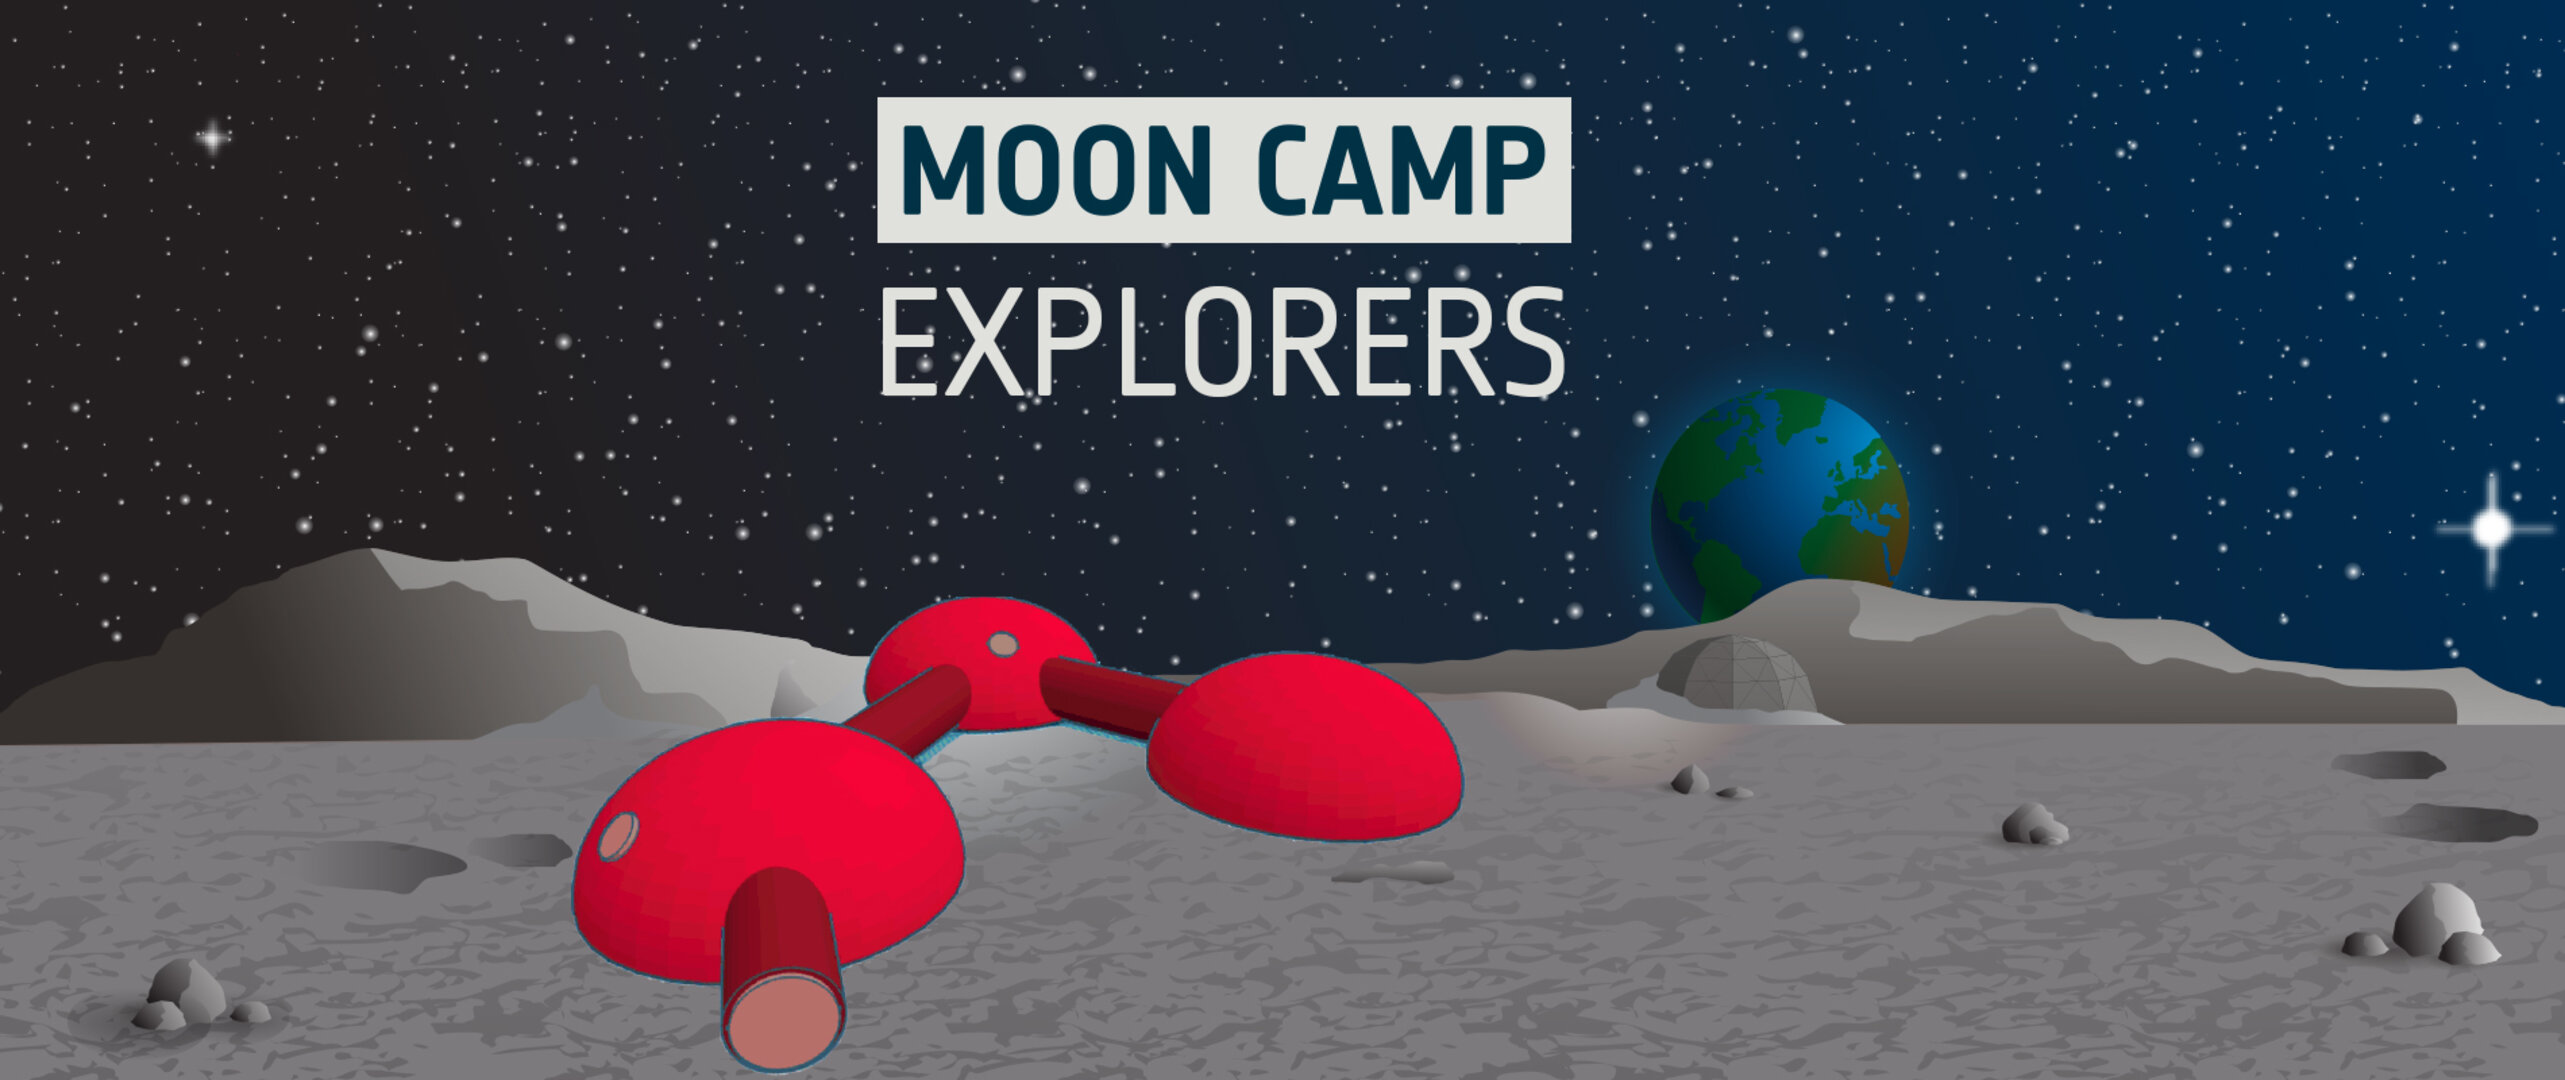 Moon Camp Explorers 